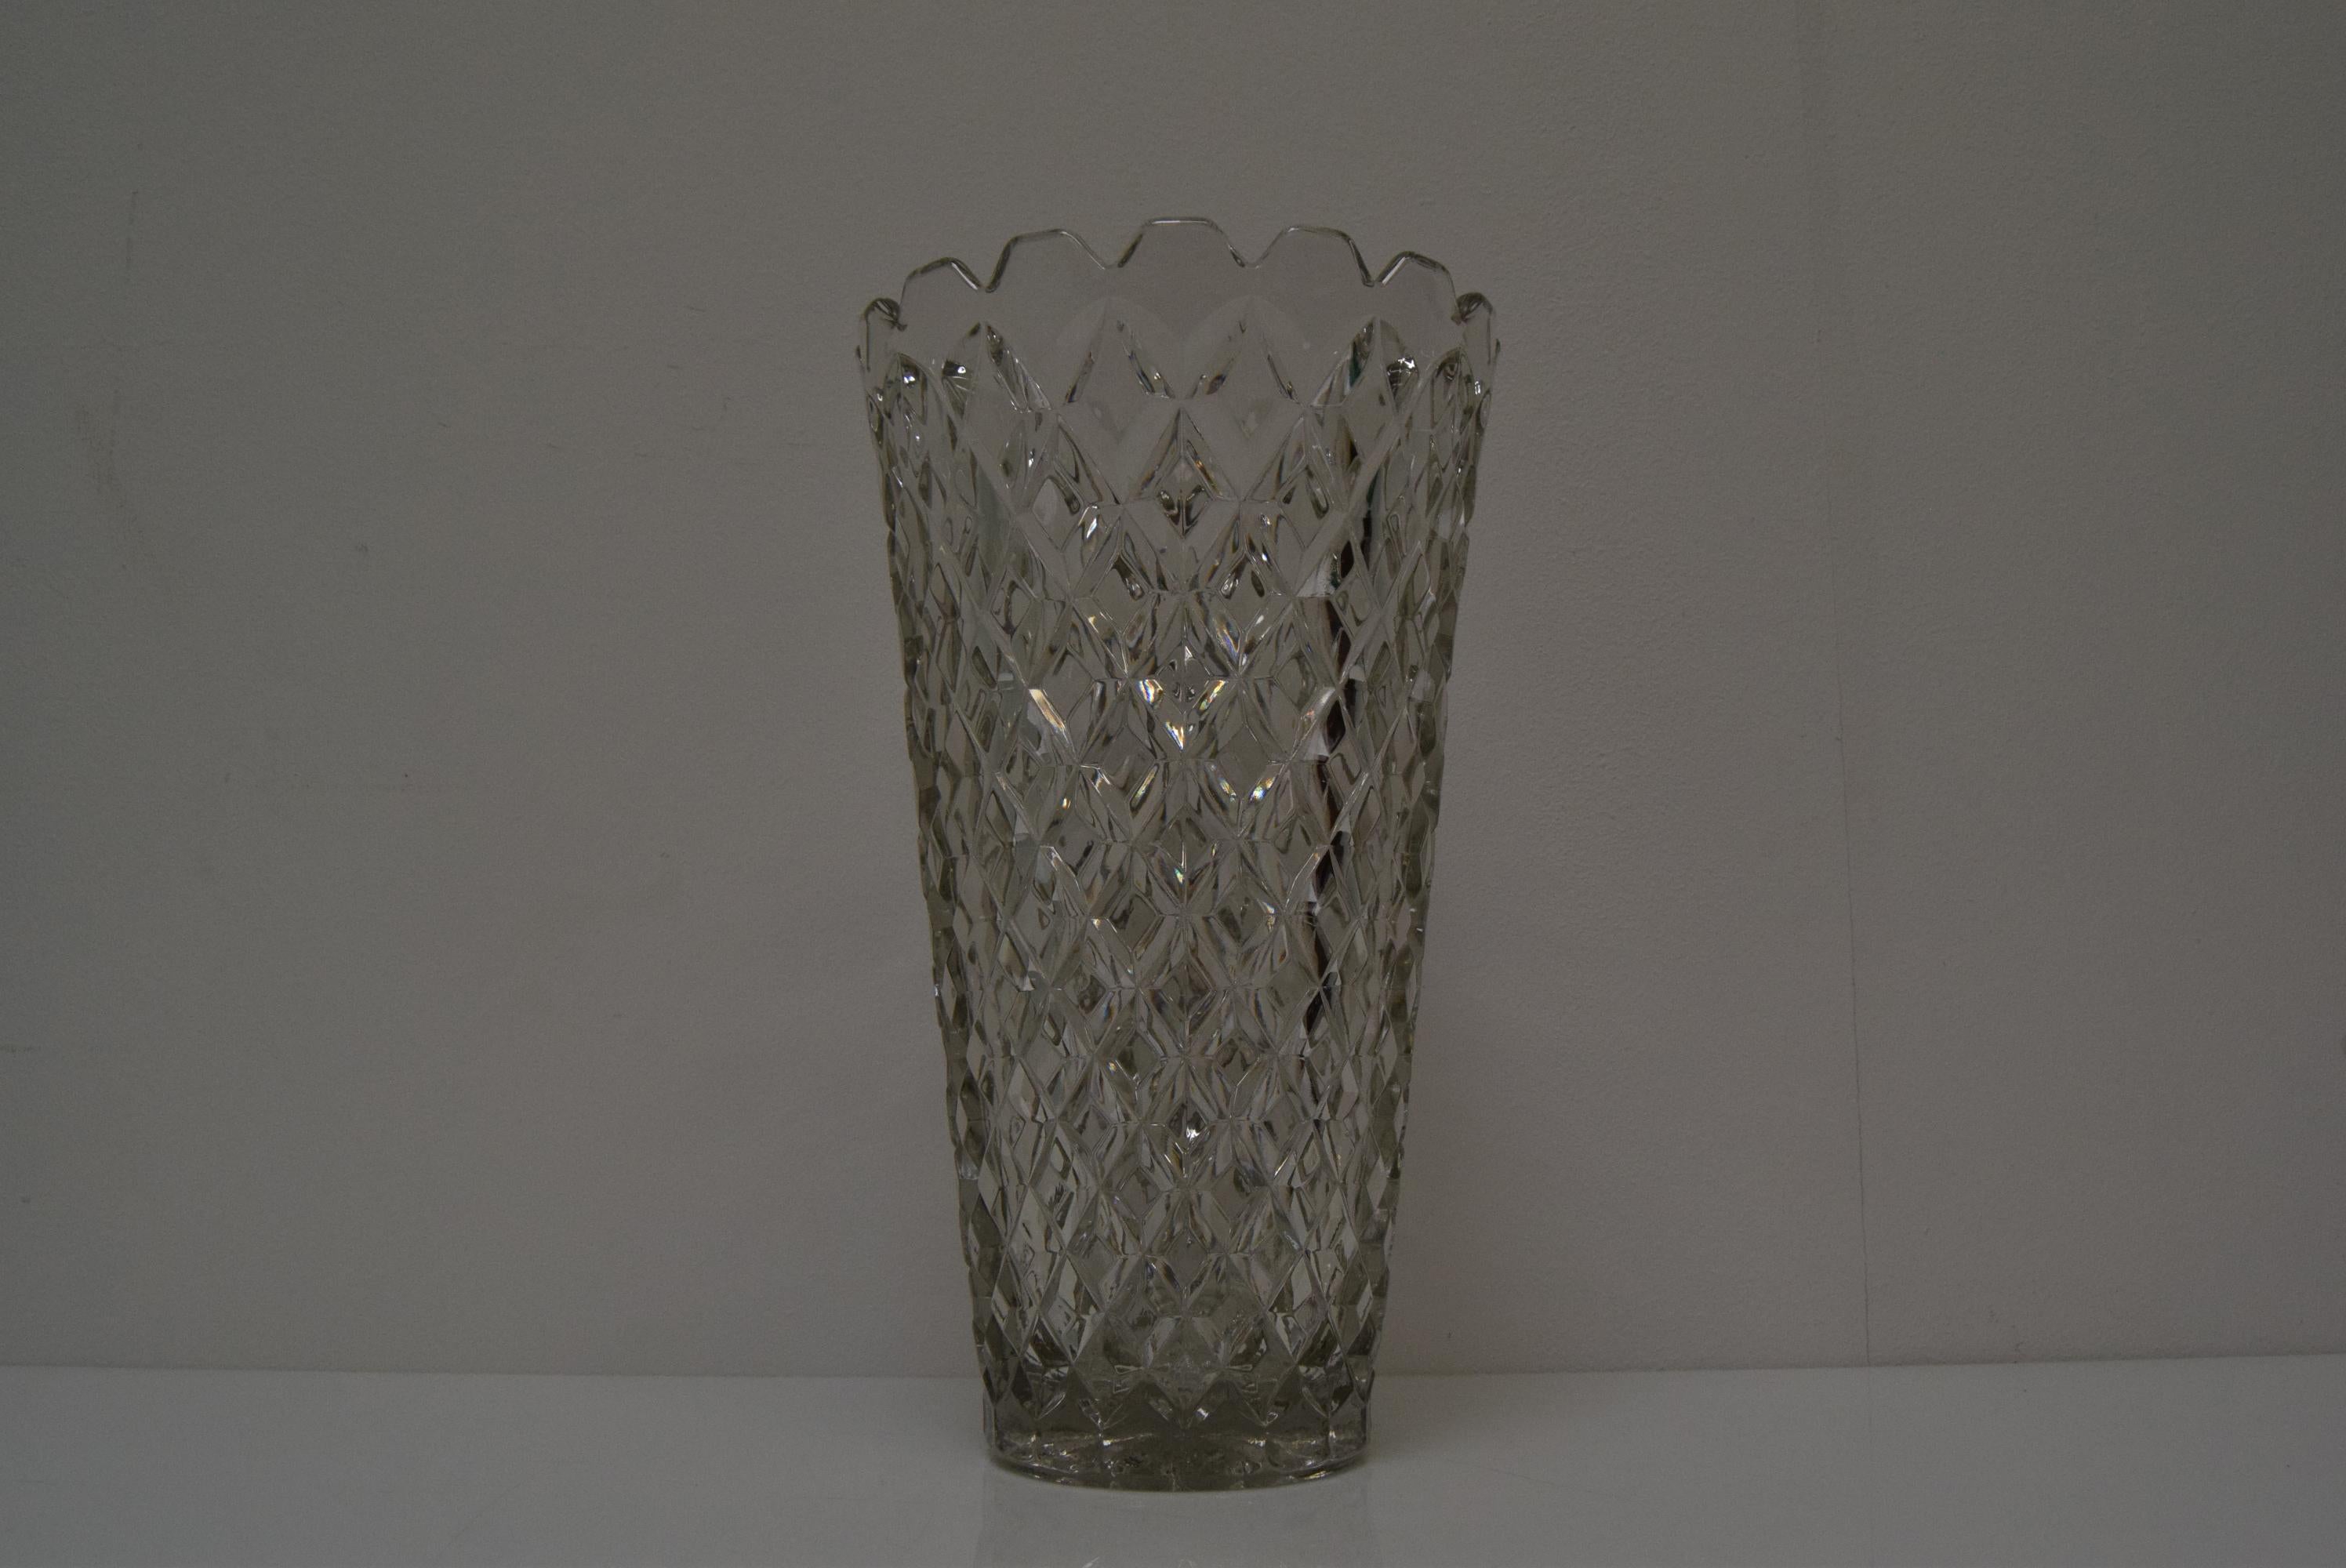 Czech Midcentury Glass Vase, by Glasswork Novy Bor, 1960s For Sale